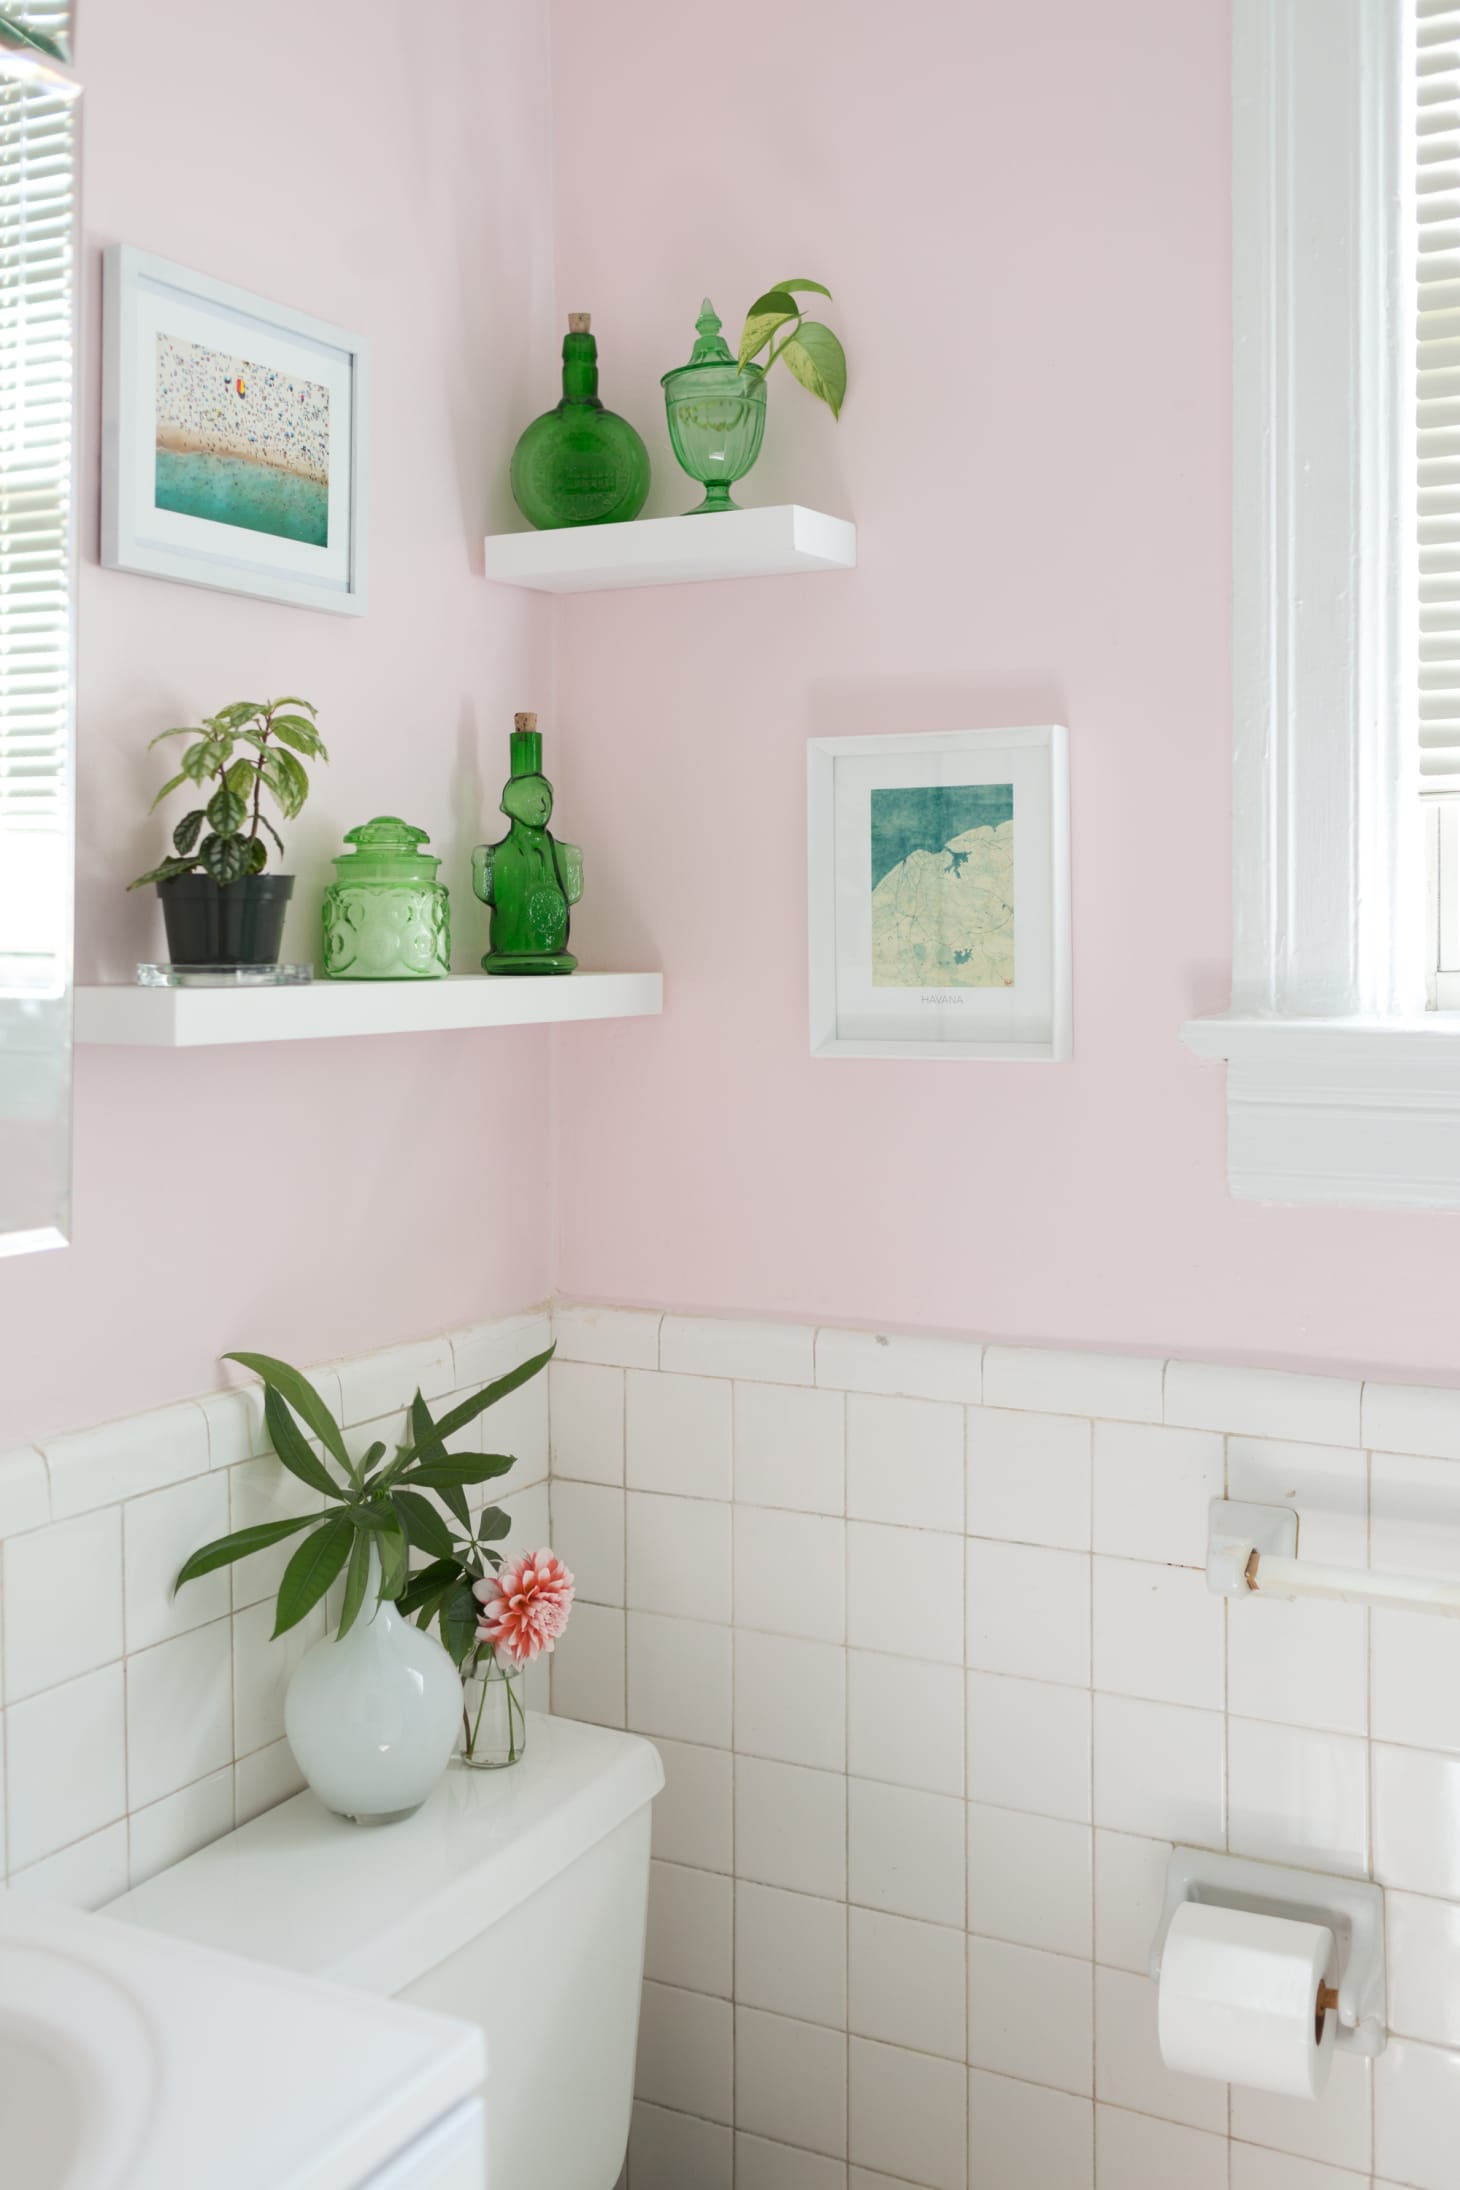 The 30 Best Bathroom Colors - Bathroom Paint Color Ideas ...